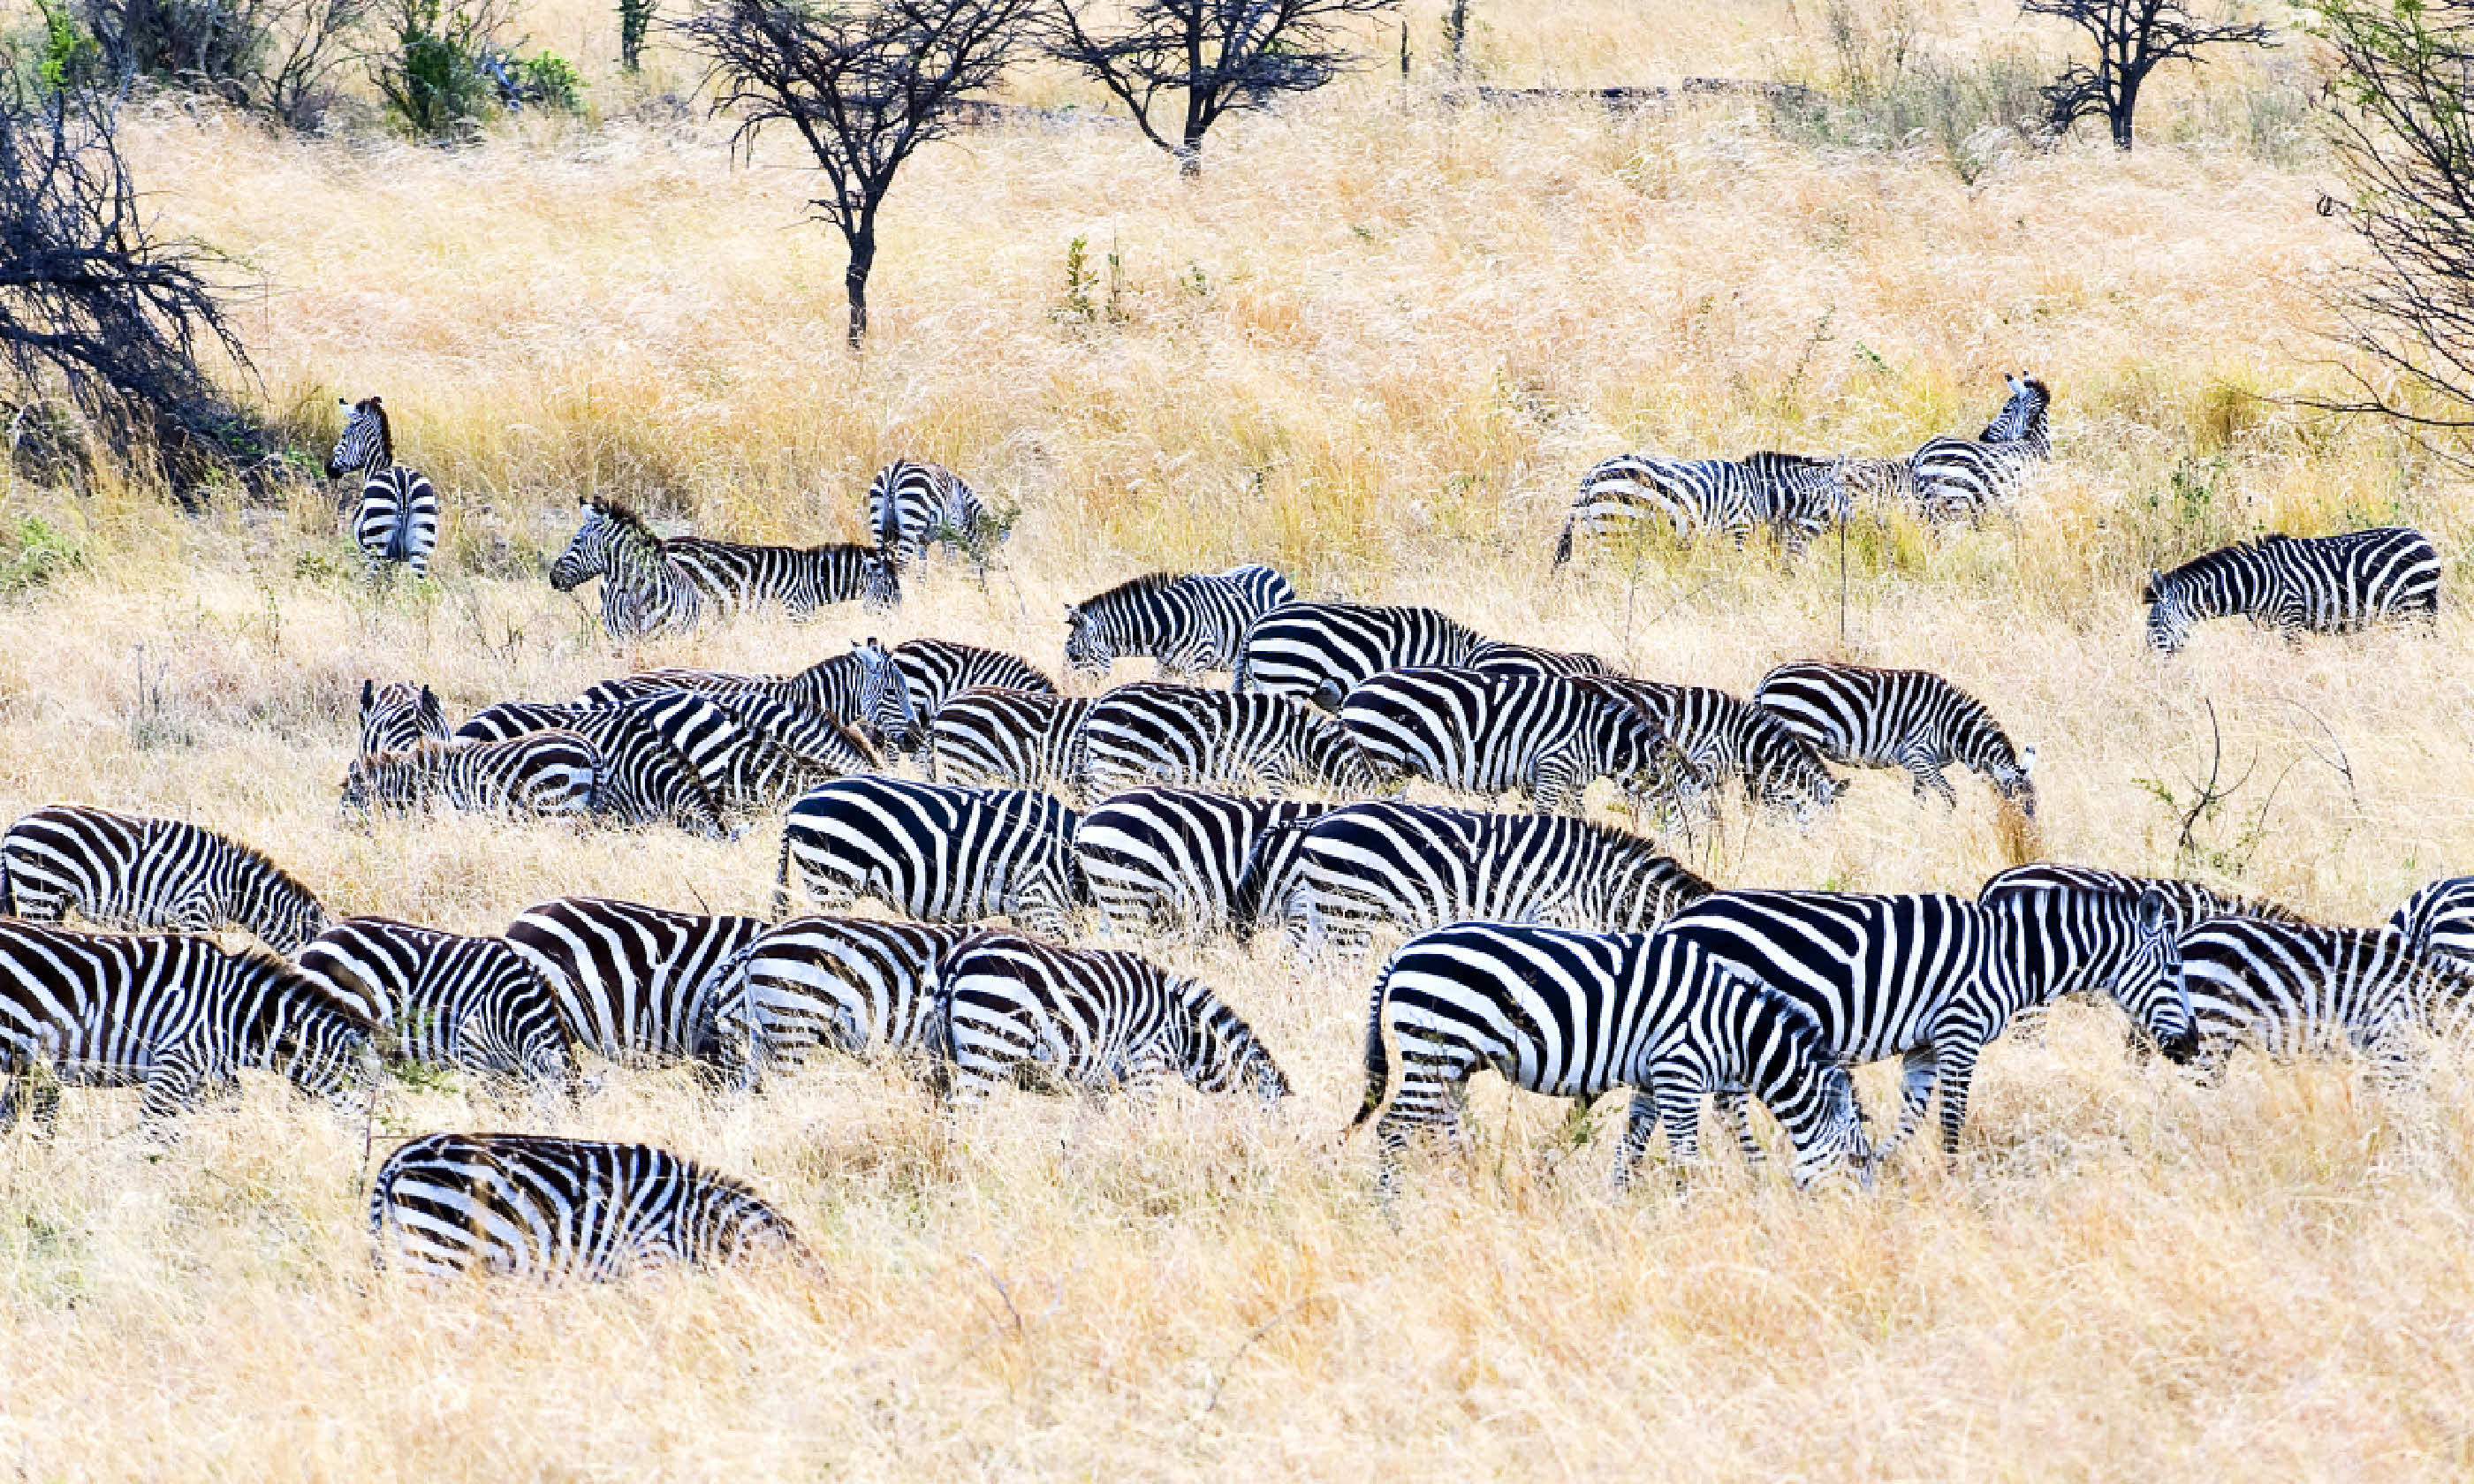 Serengeti National Park, Seronera area (Shutterstock)